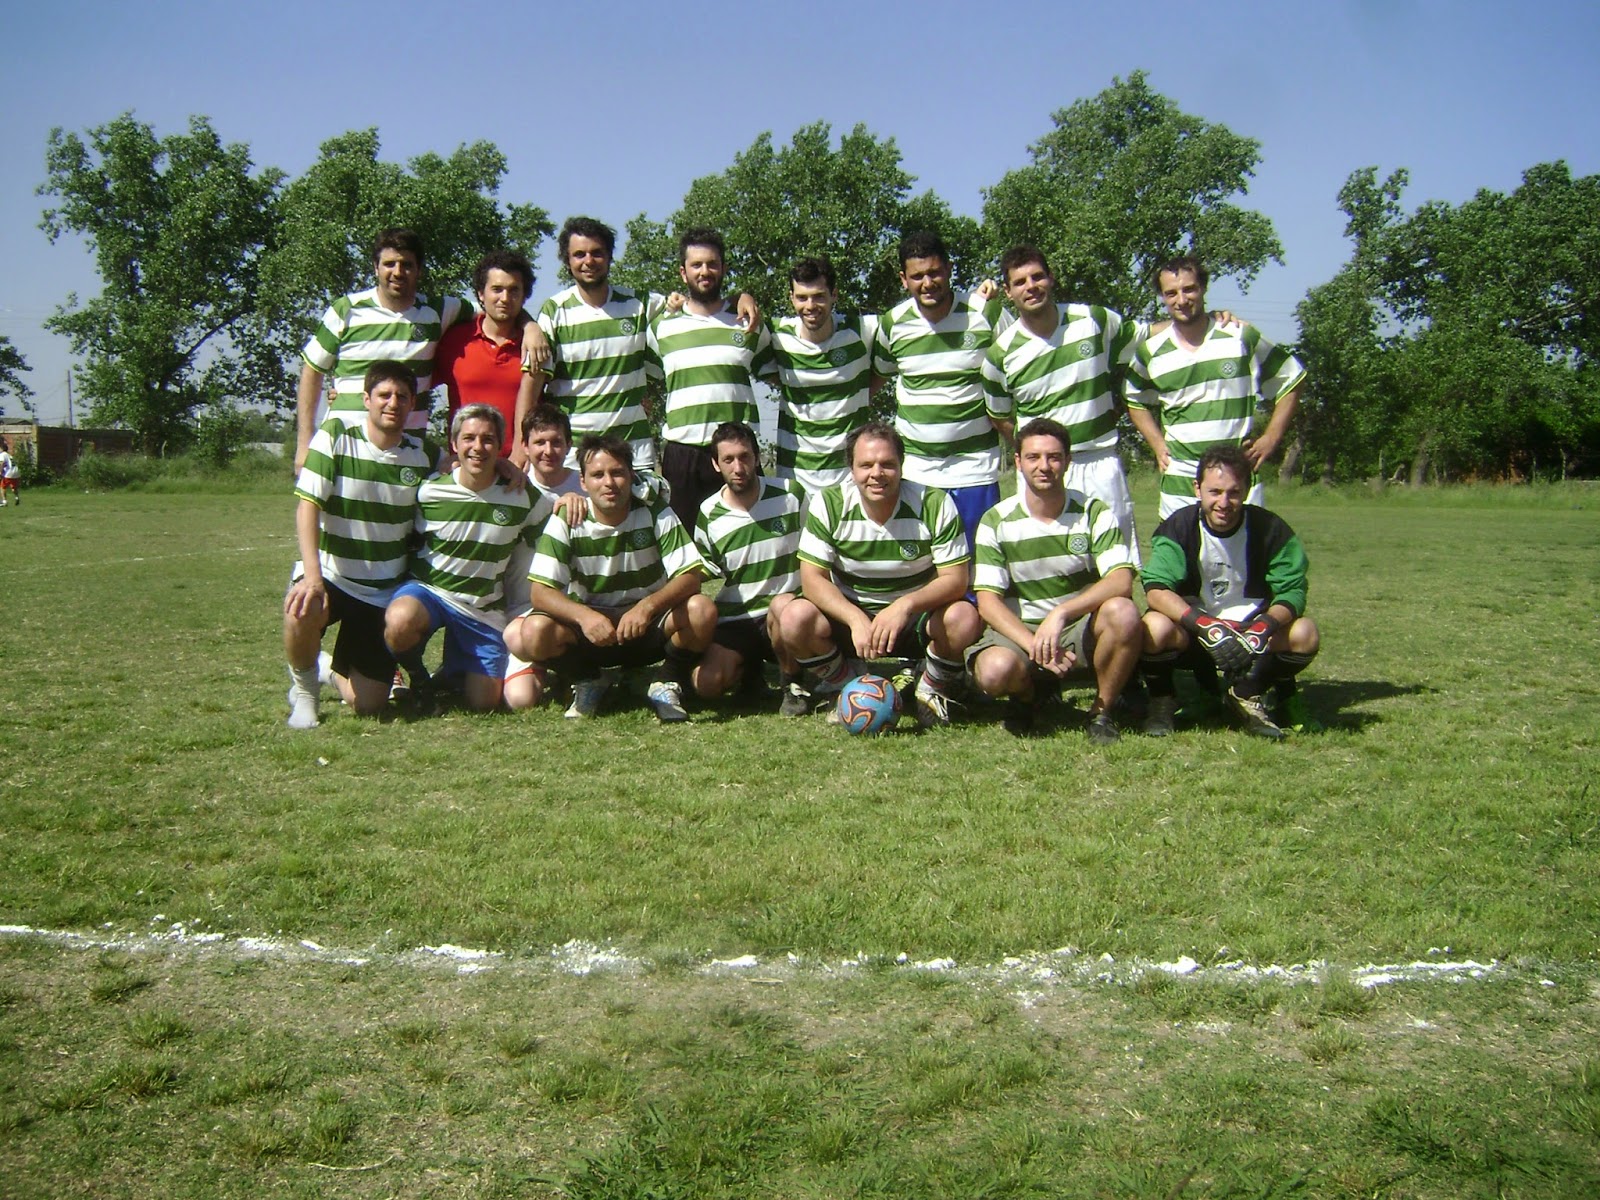 Clausura 2014